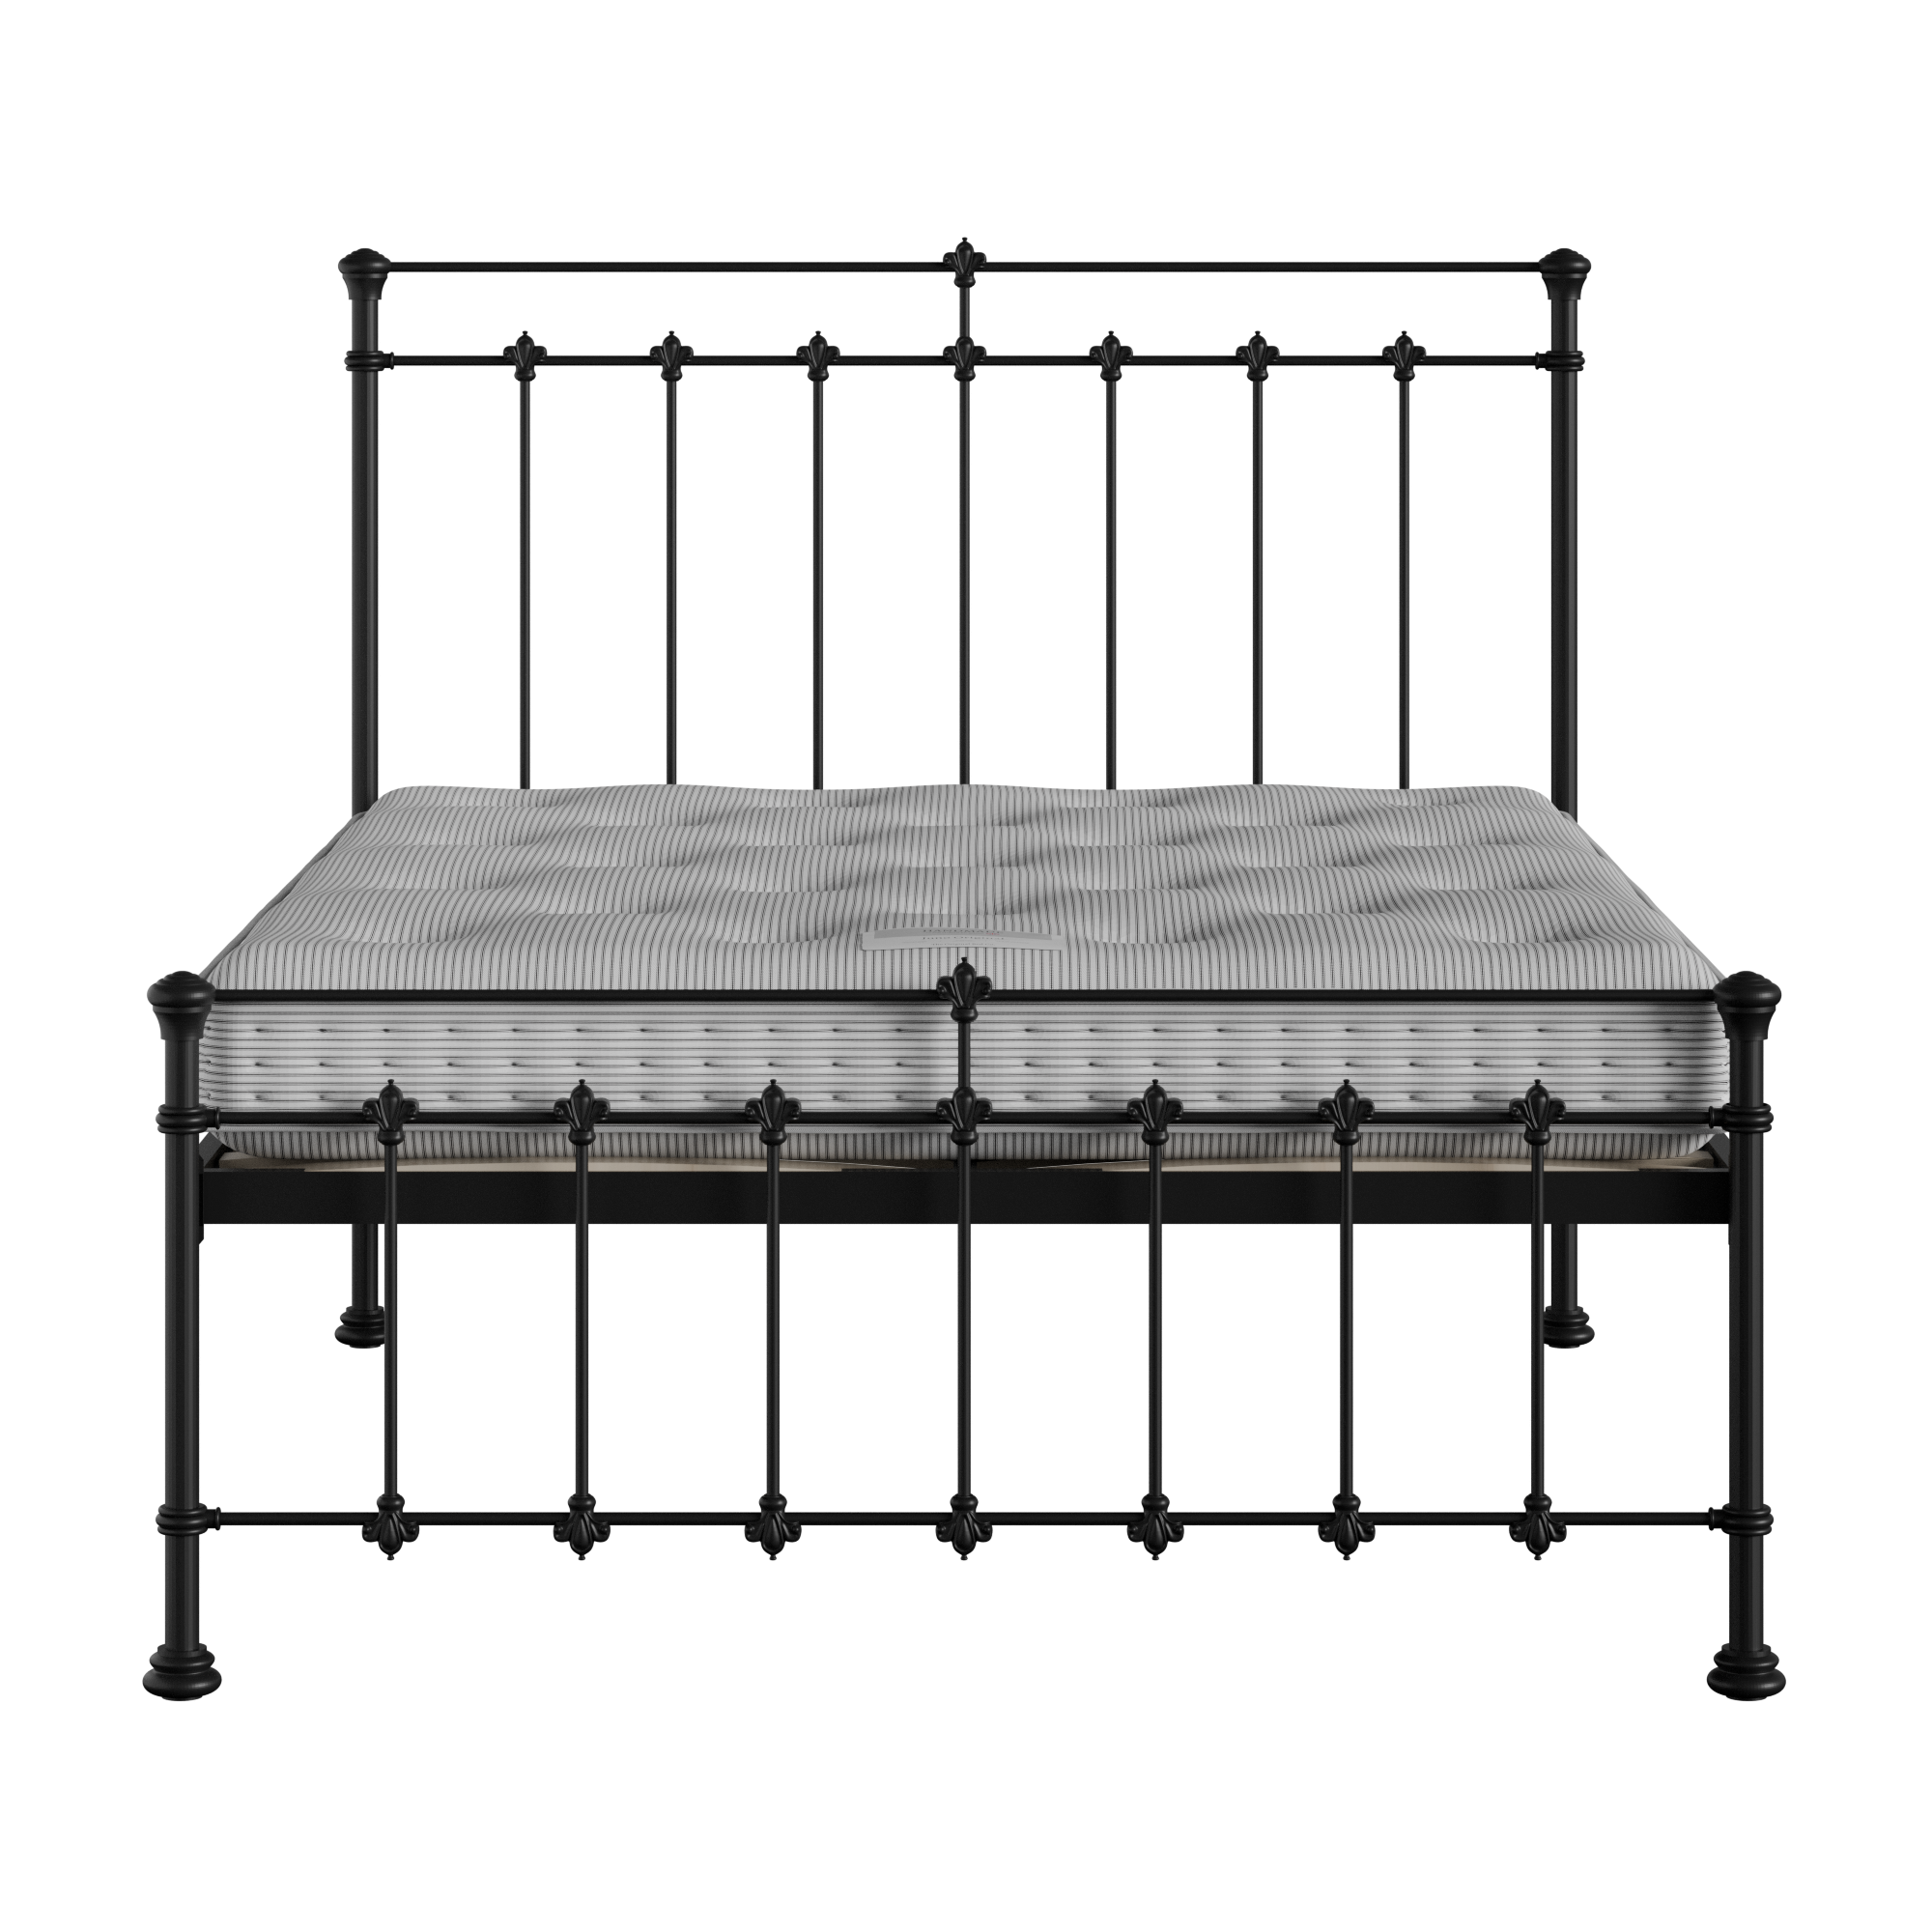 Edwardian cama de metal en negro con colchón